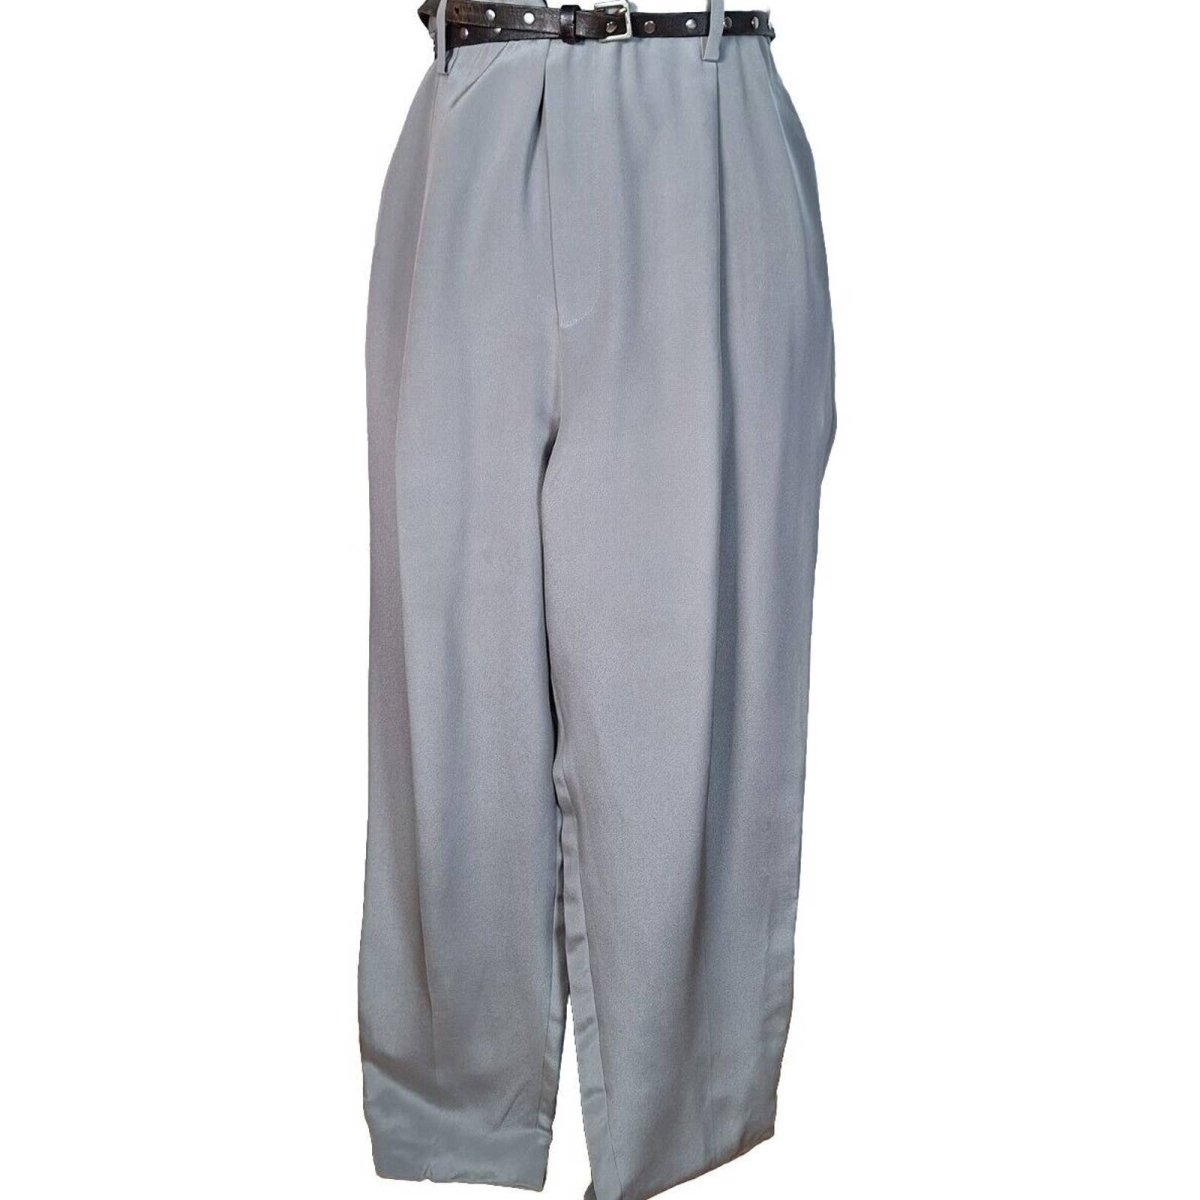 Vintage 90s Slate Silver 100% Silk Pants Women's Size 29x28 Petite Medium - themallvintage The Mall Vintage